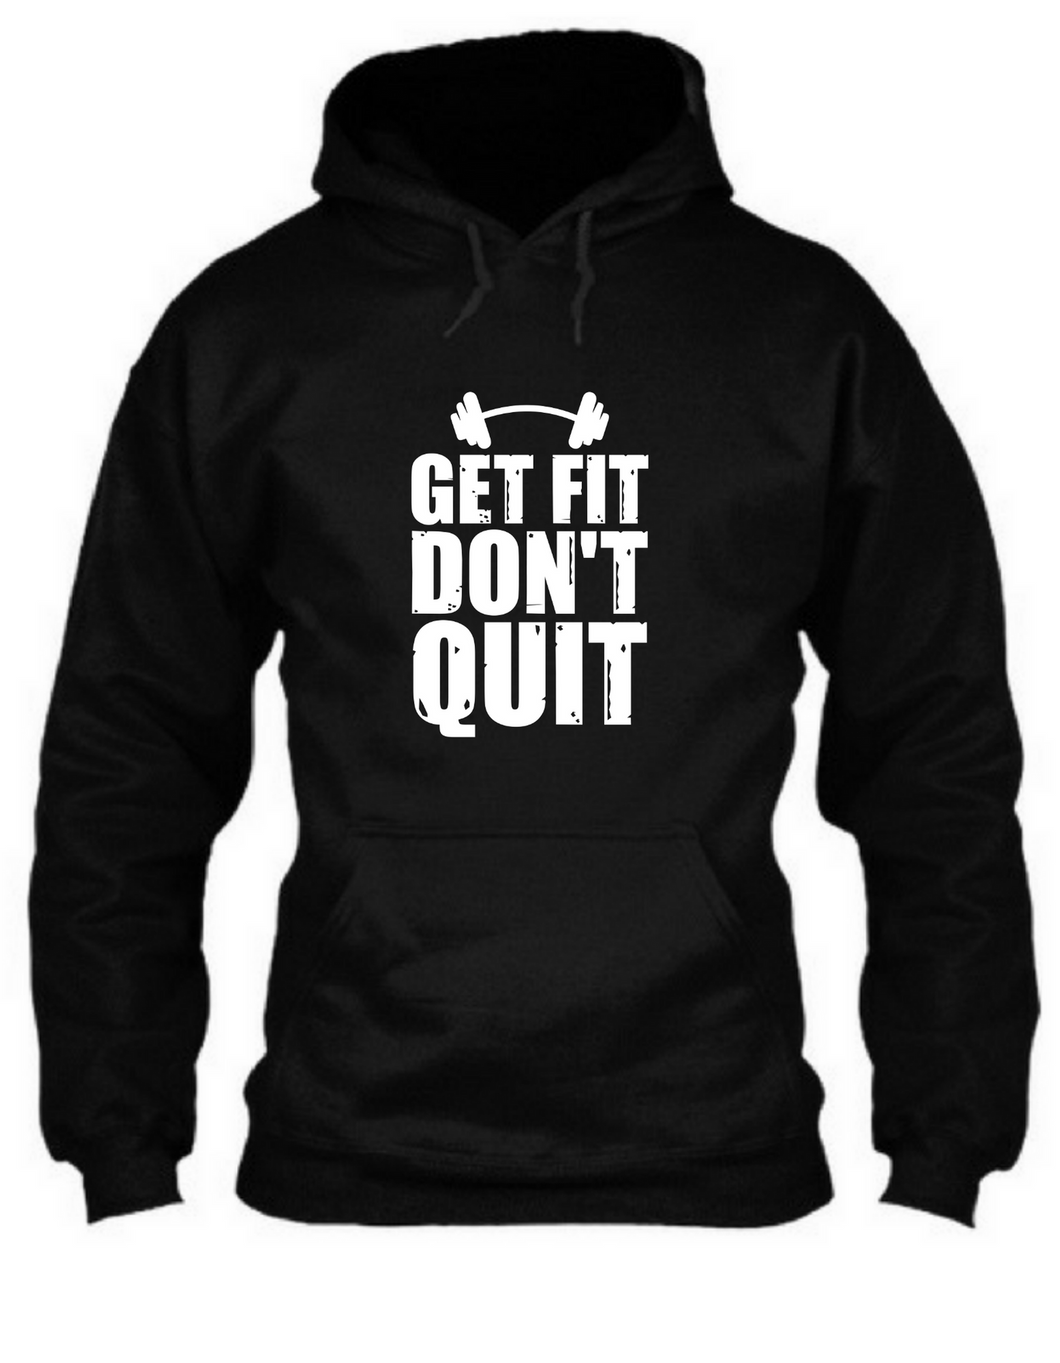 Get fit don't quit - Unisex Hoodie